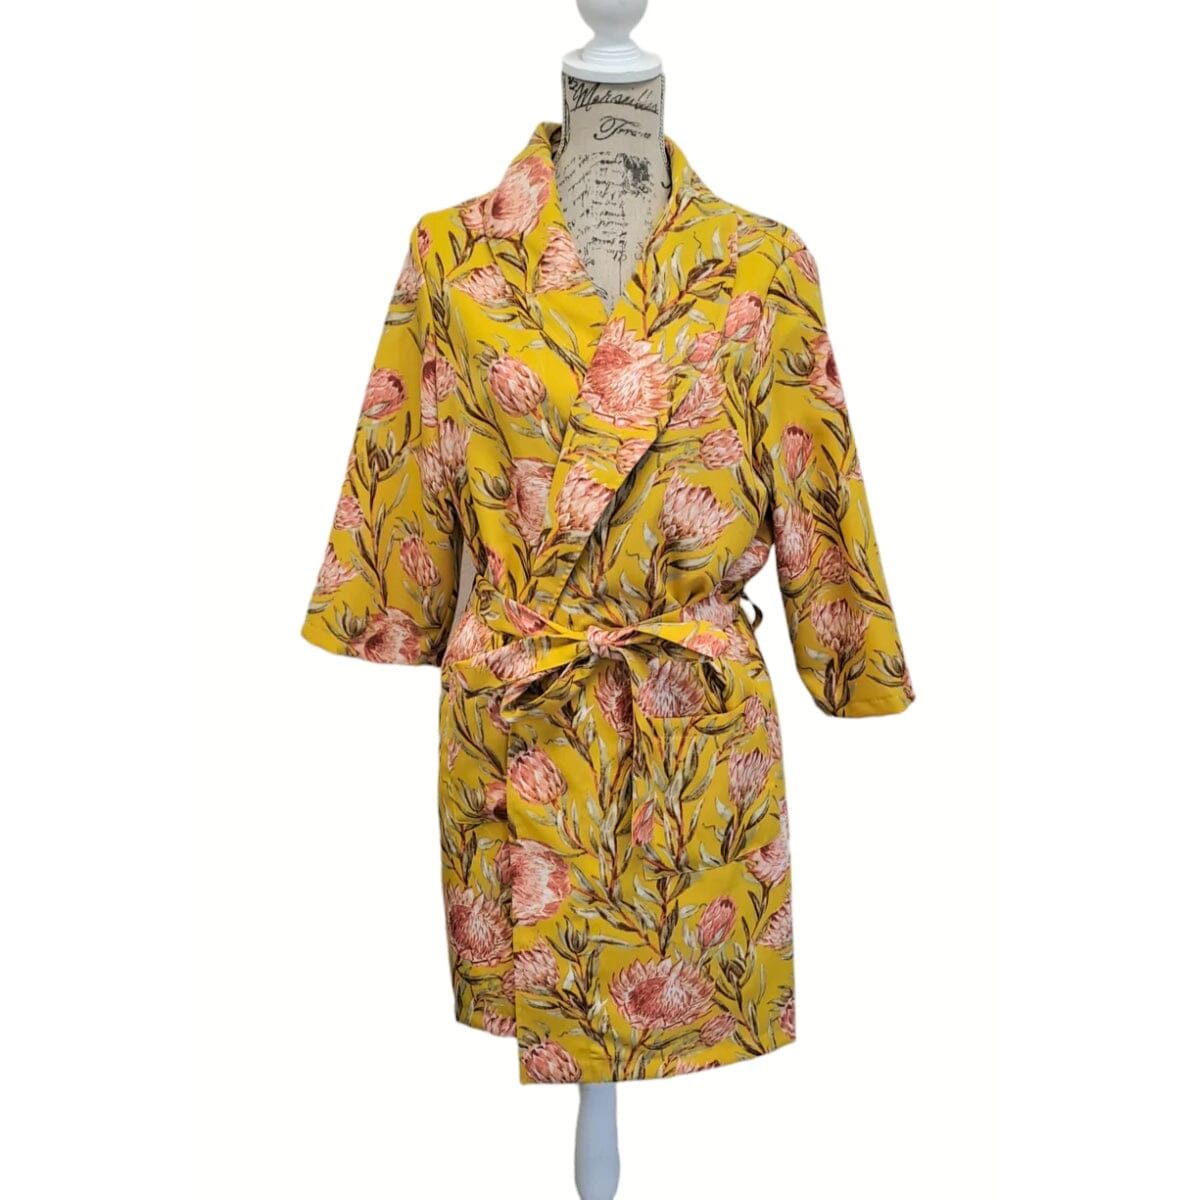 Tradishnal Ladies Printed Gowns Sleepwear TraDishNal Yellow Protea small / medium 